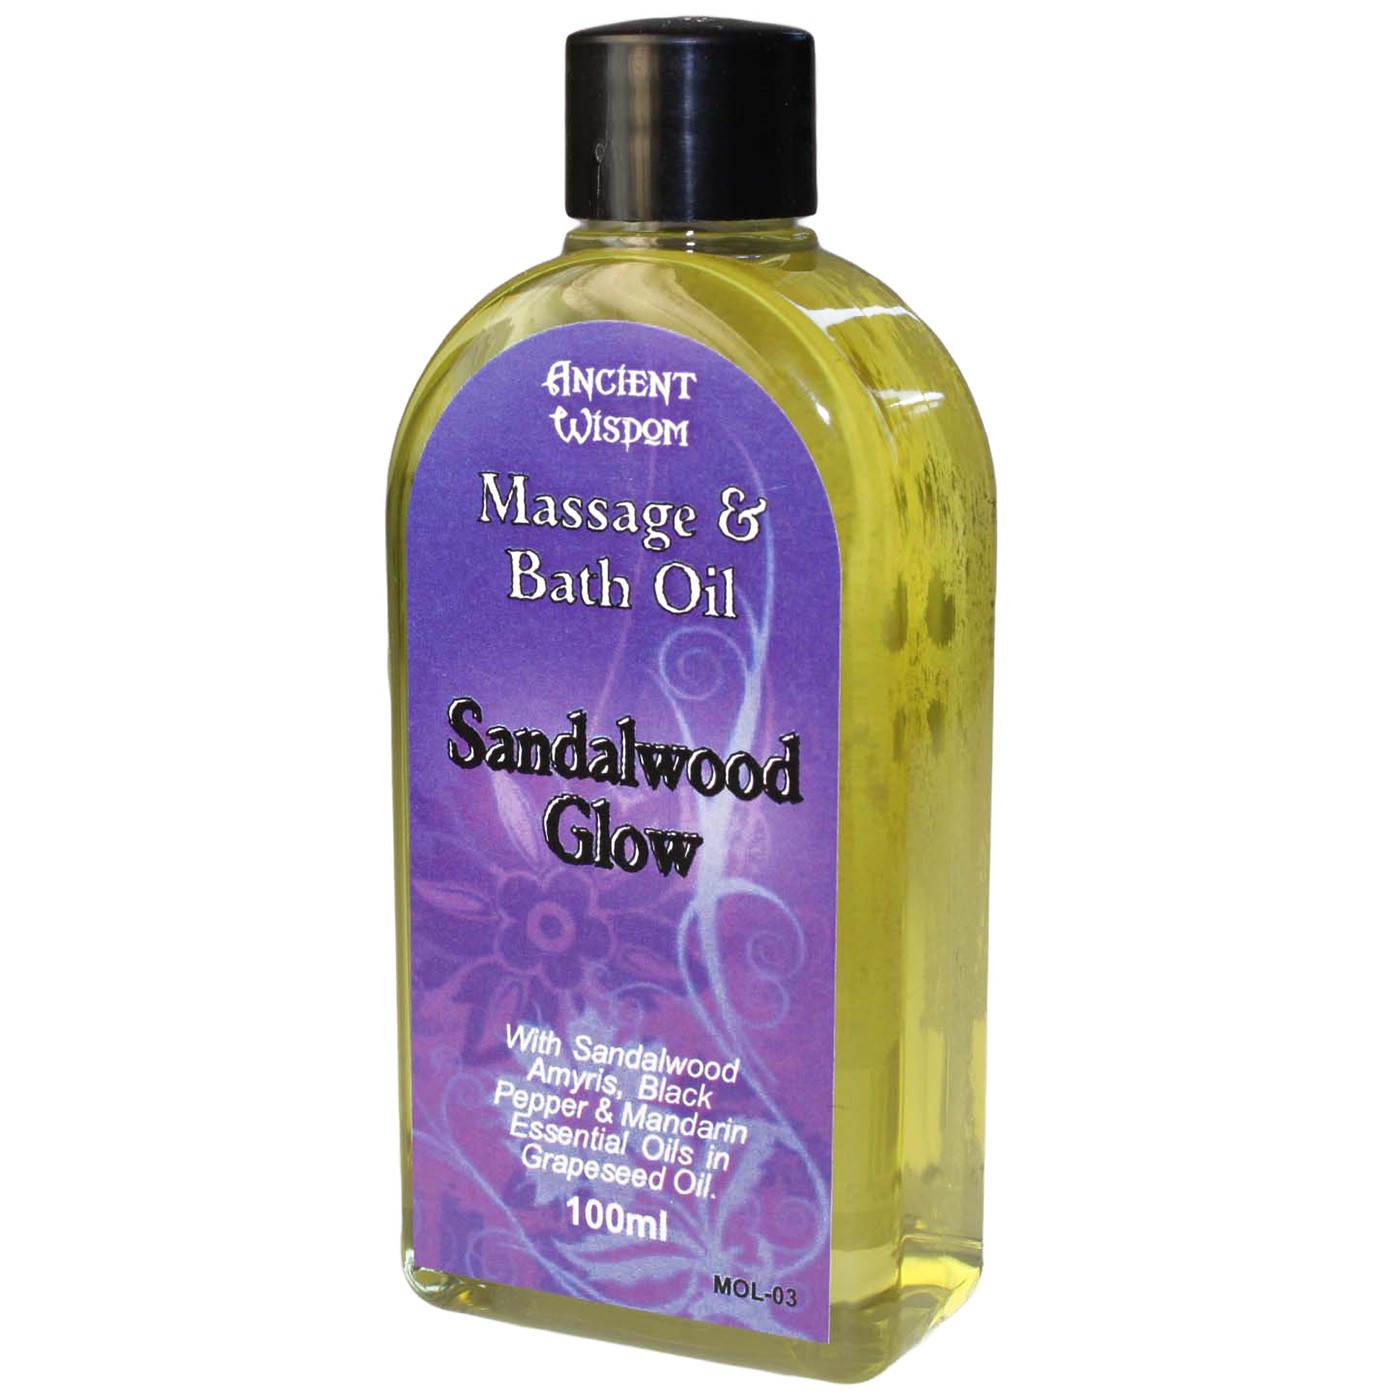 Sandalwood Glow Massage Oil